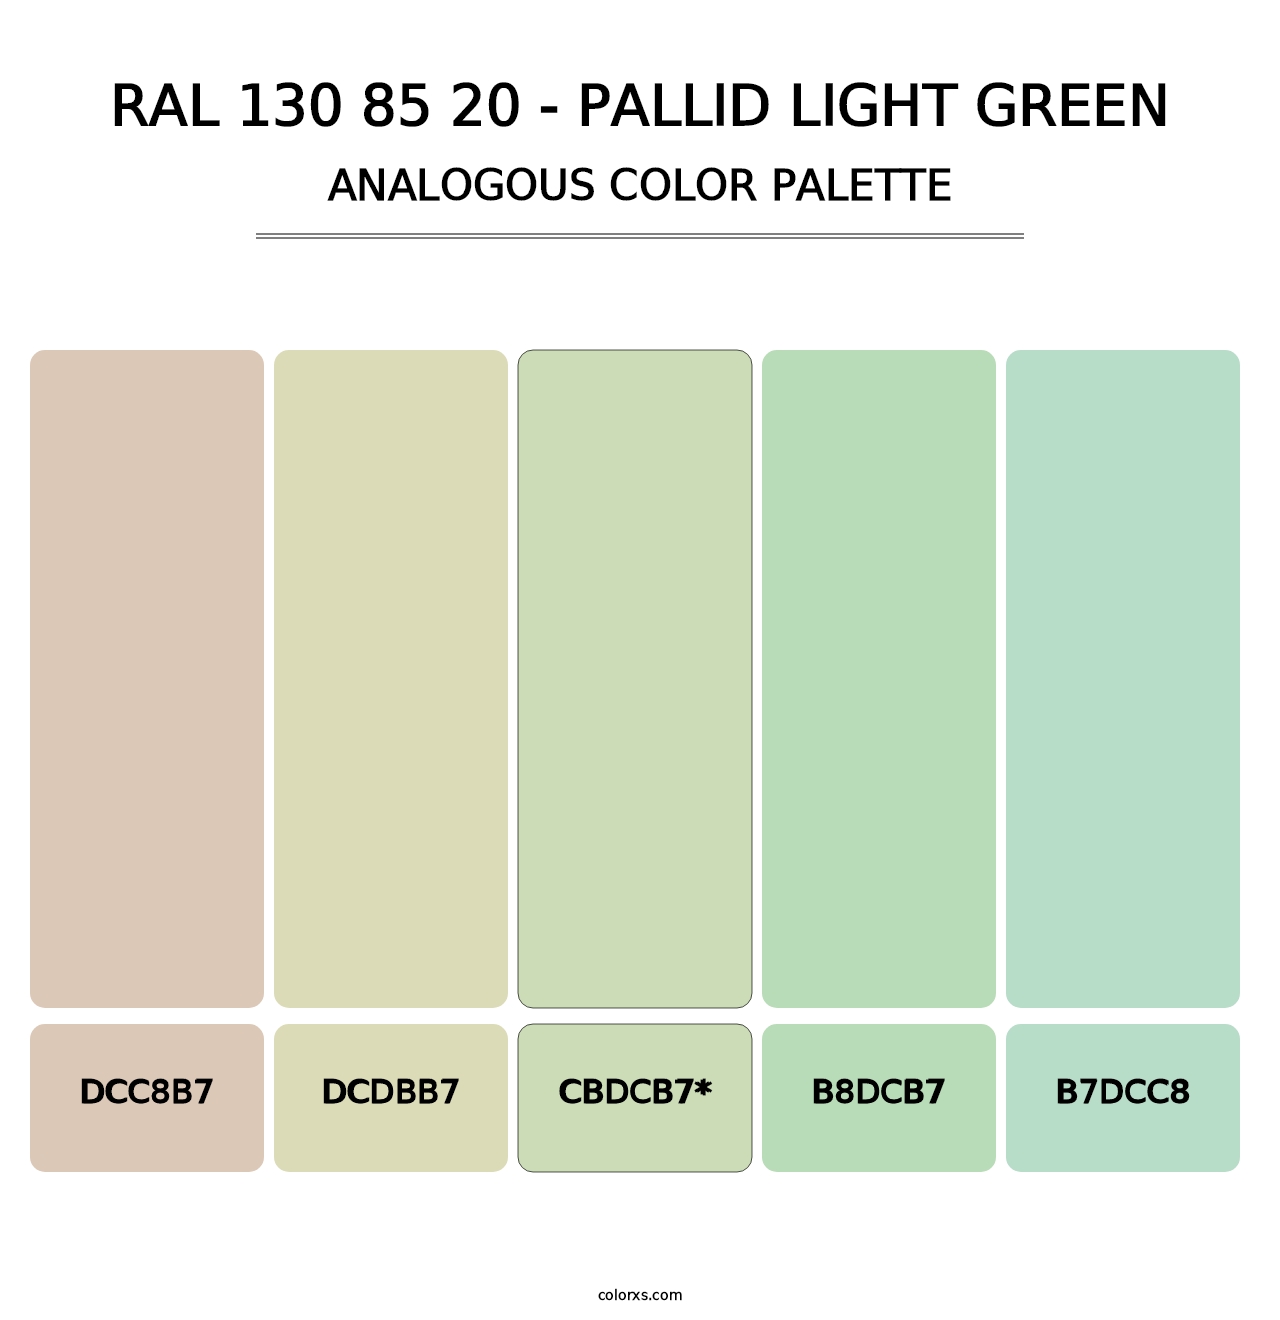 RAL 130 85 20 - Pallid Light Green - Analogous Color Palette